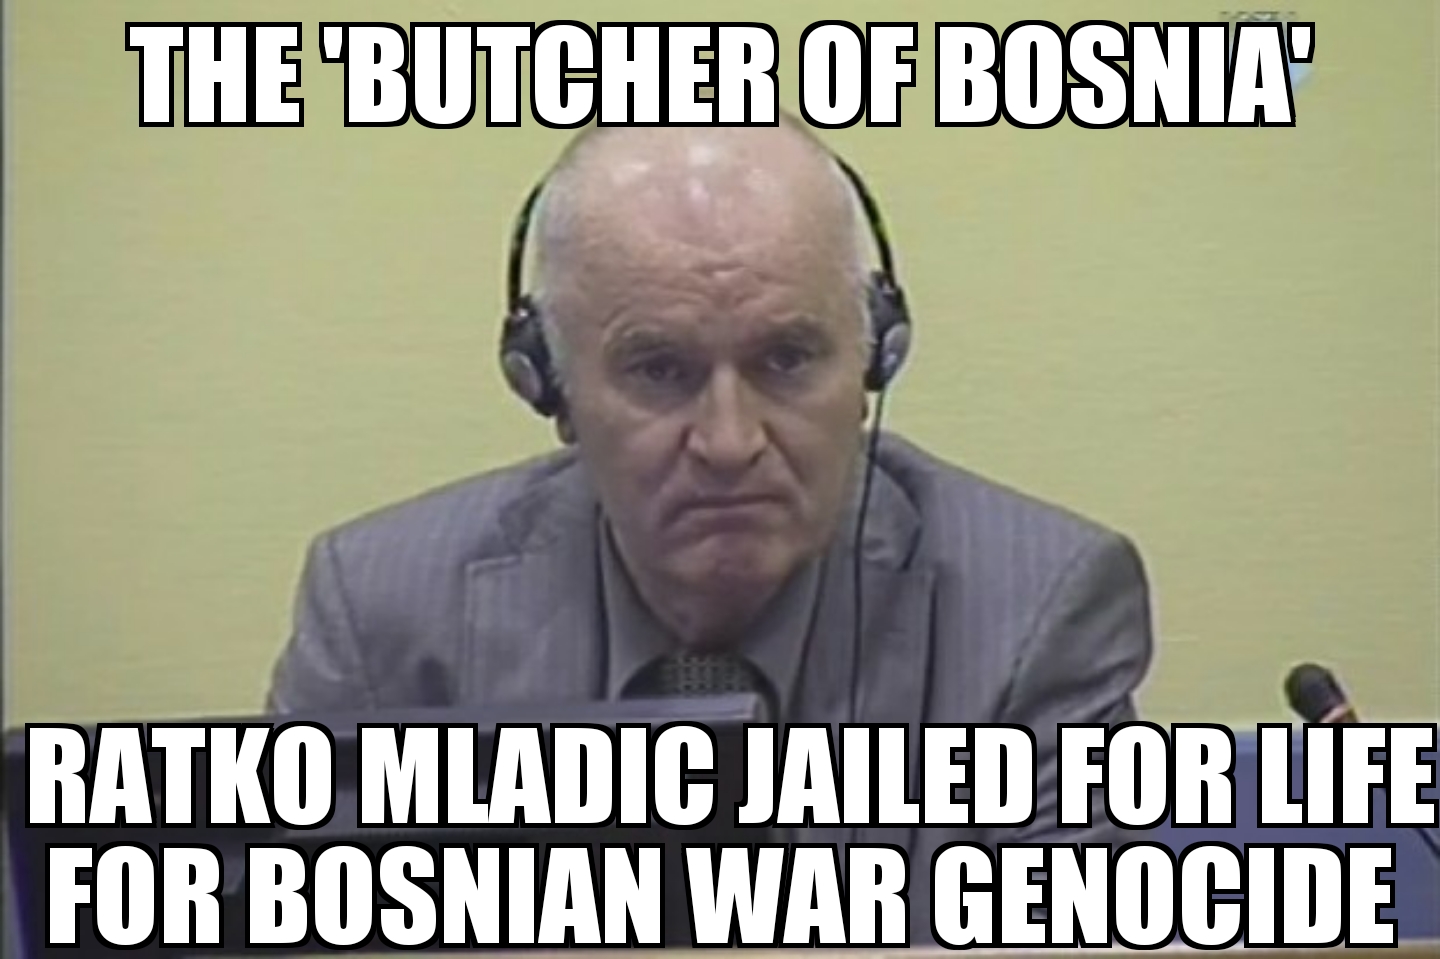 Ratko Mladic jailed for life